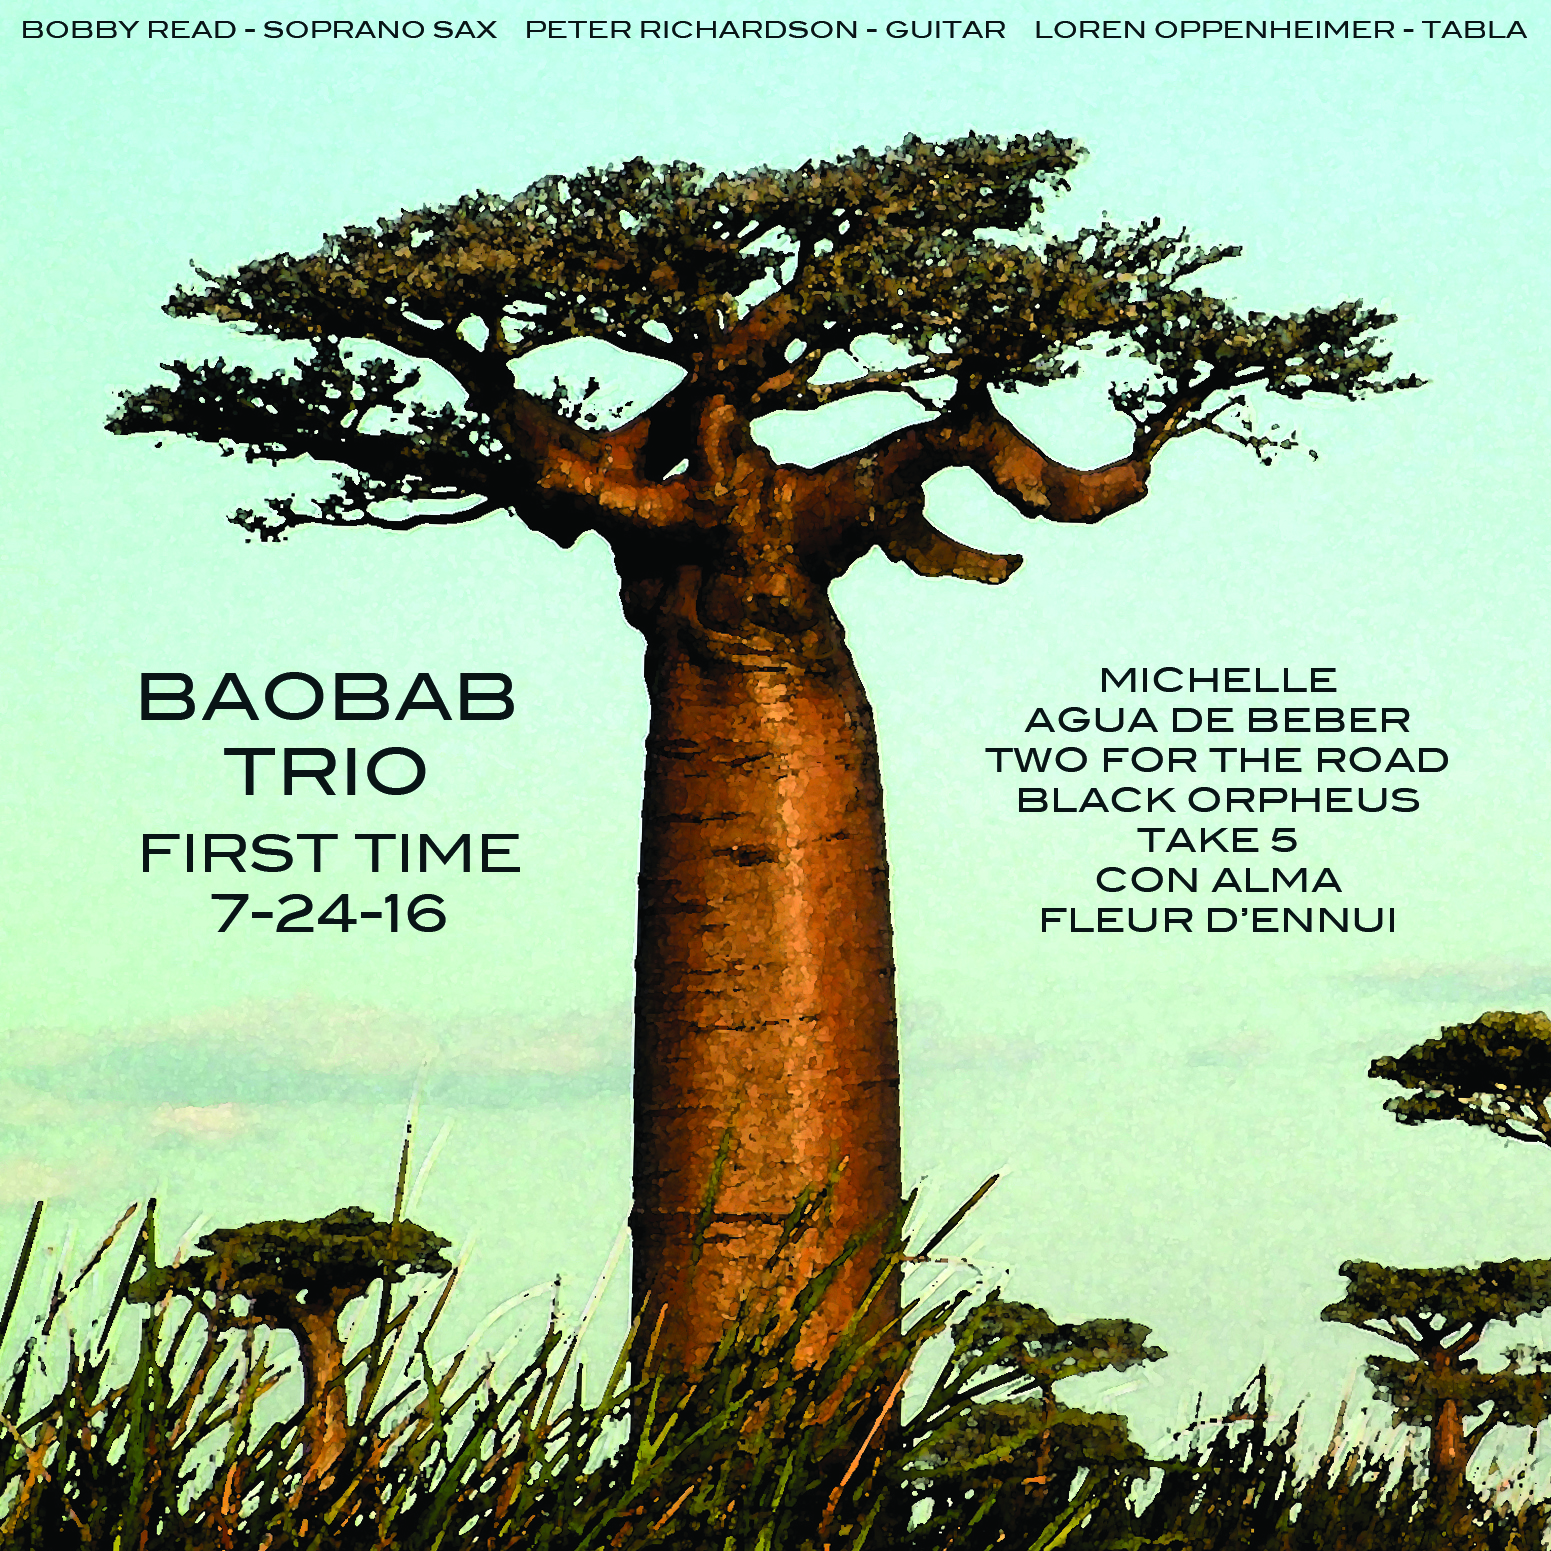 Baobab Trio - First Time 7-24-16